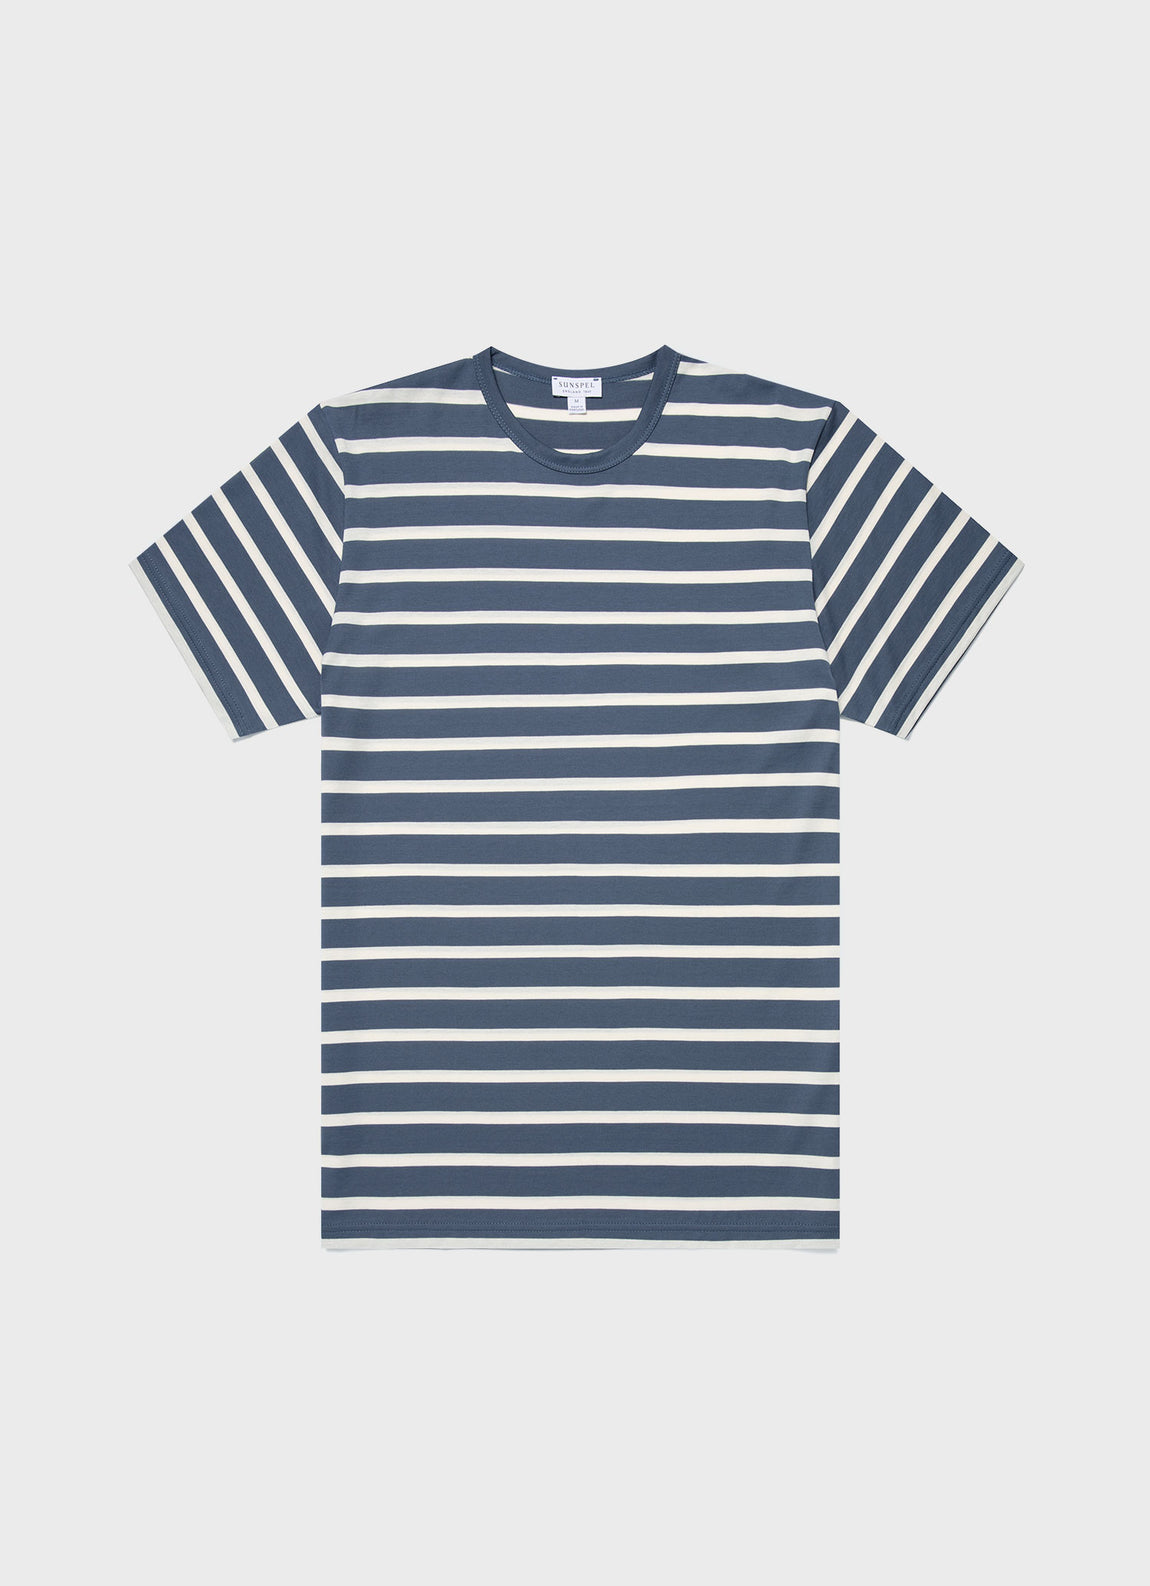 Men's Classic T-shirt in Slate Blue/Ecru Breton Stripe | Sunspel